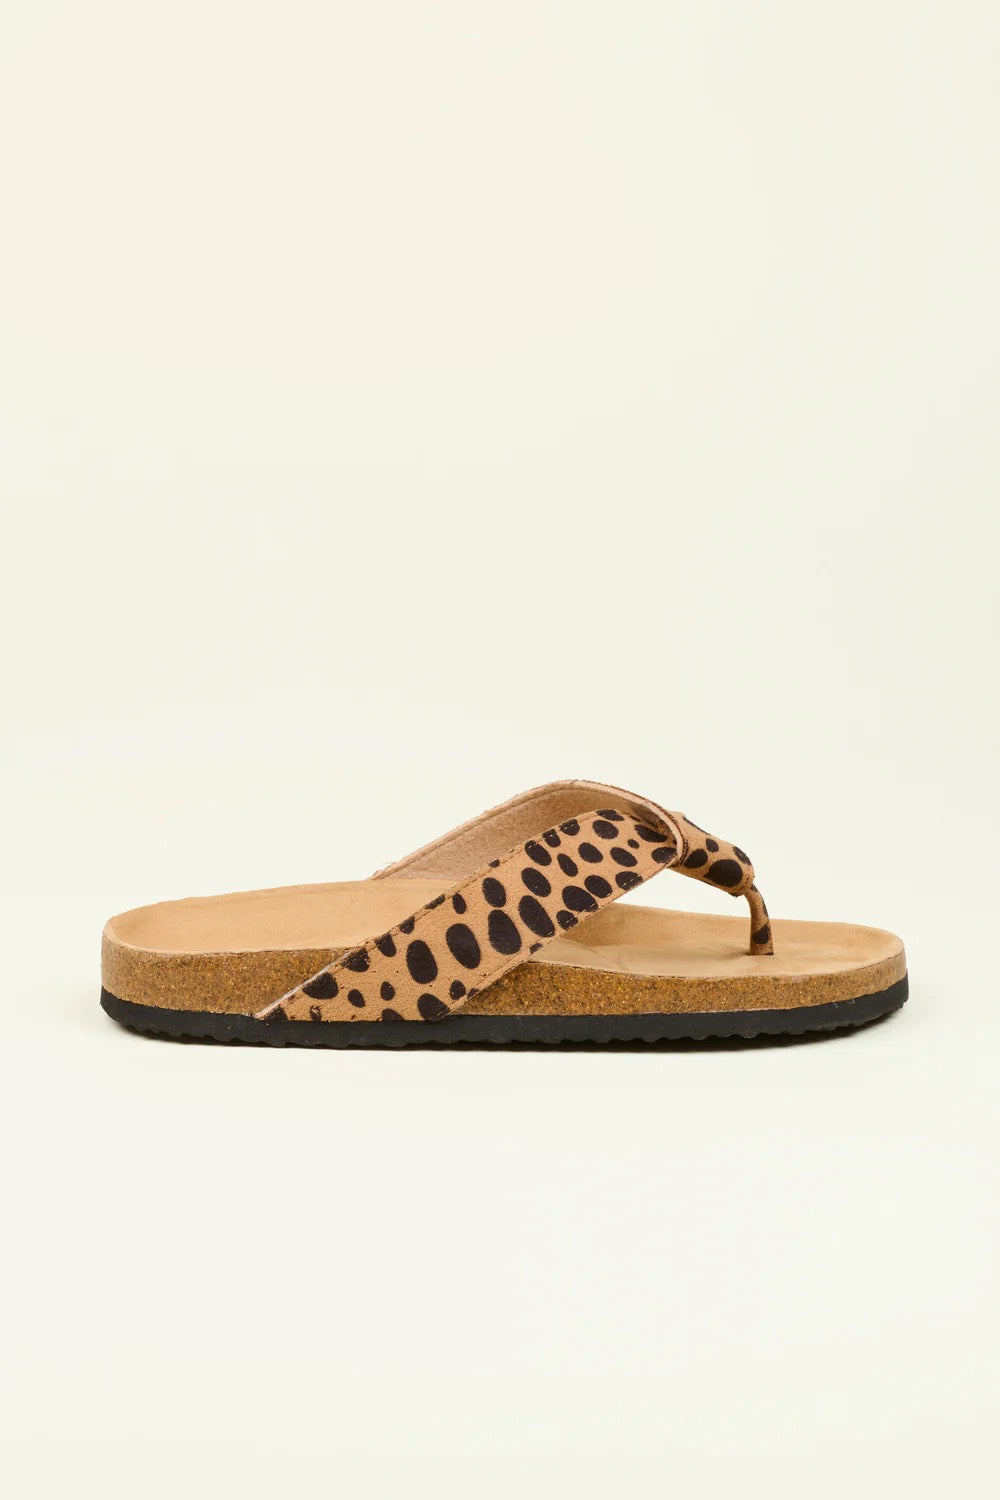 Brakeburn Women's Animal Spot Sandals - Tan/Black